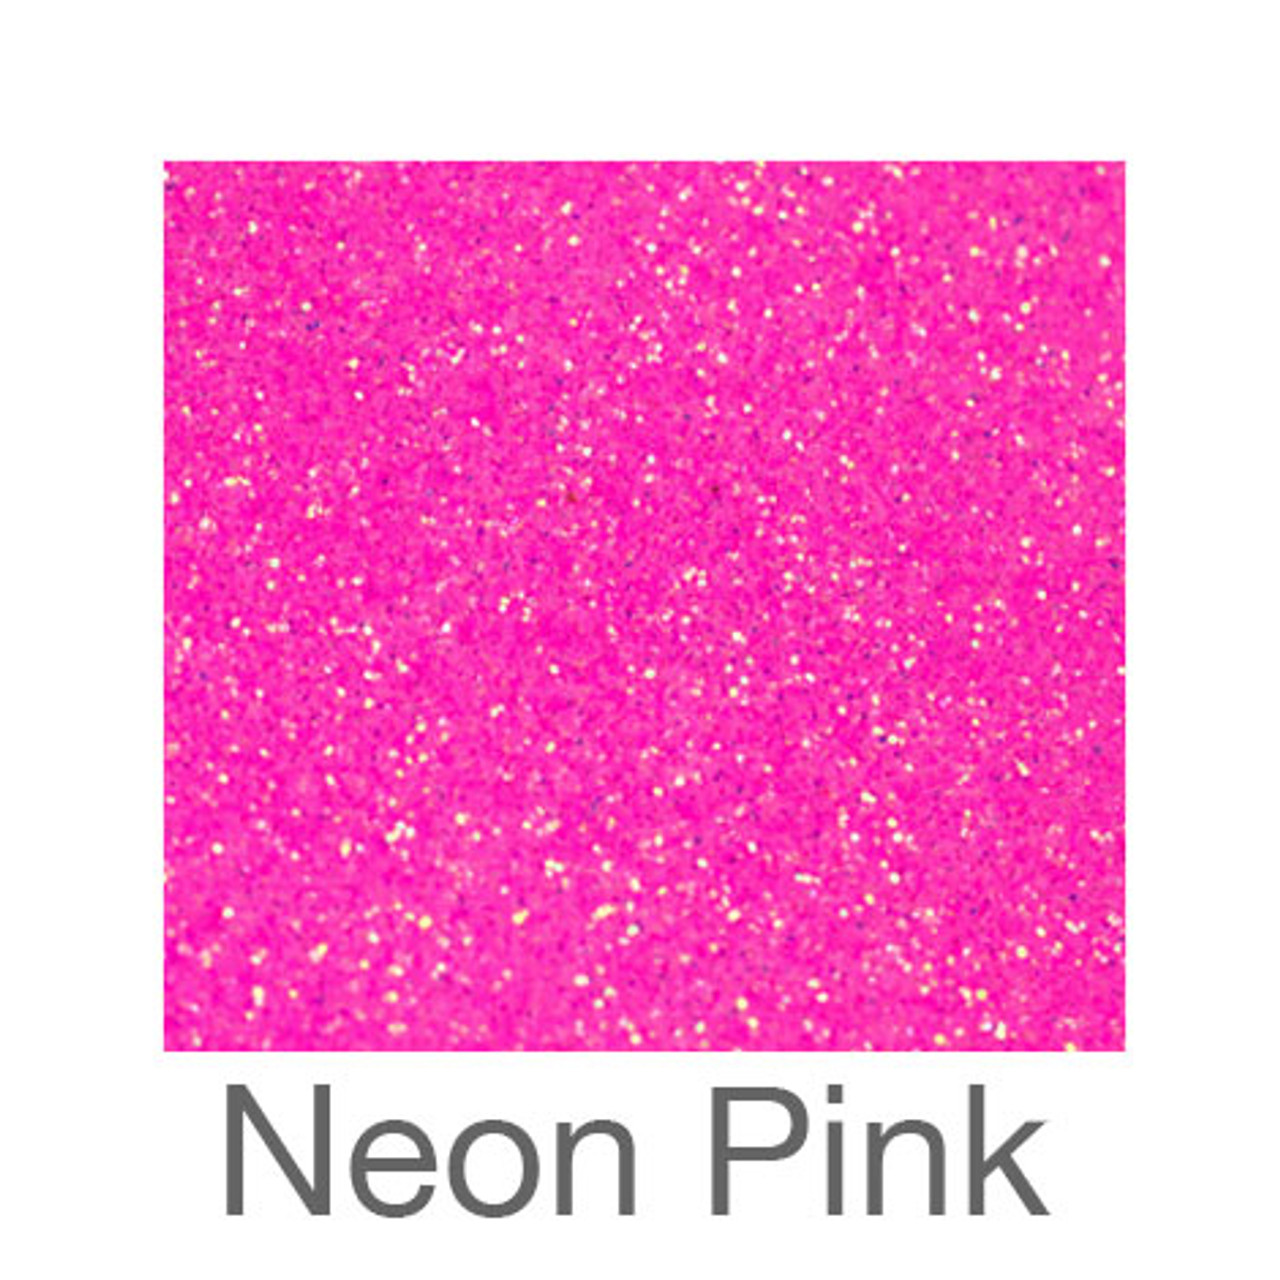 Neon Pink - Glitter - 12 x 5ft. Roll